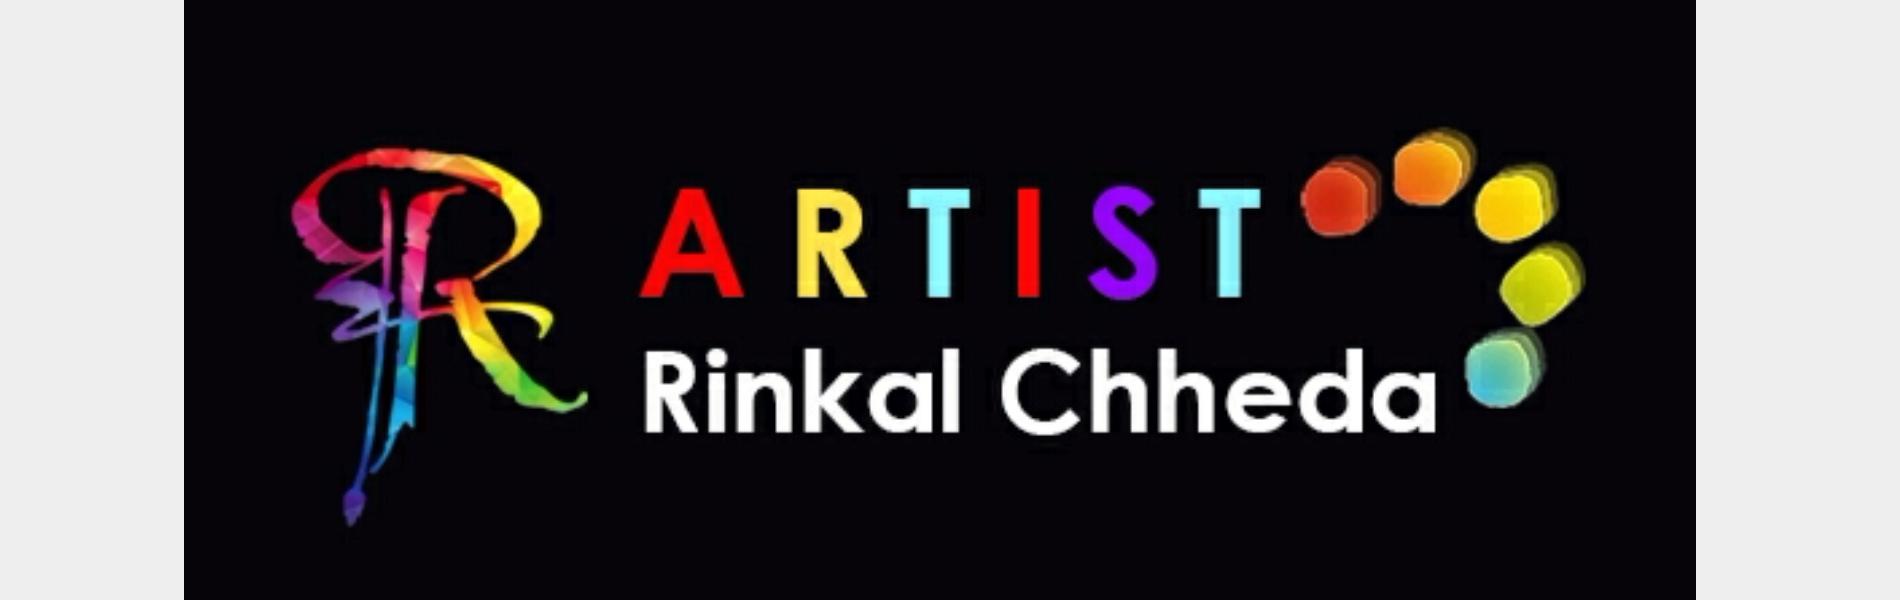 Rinkal chheda